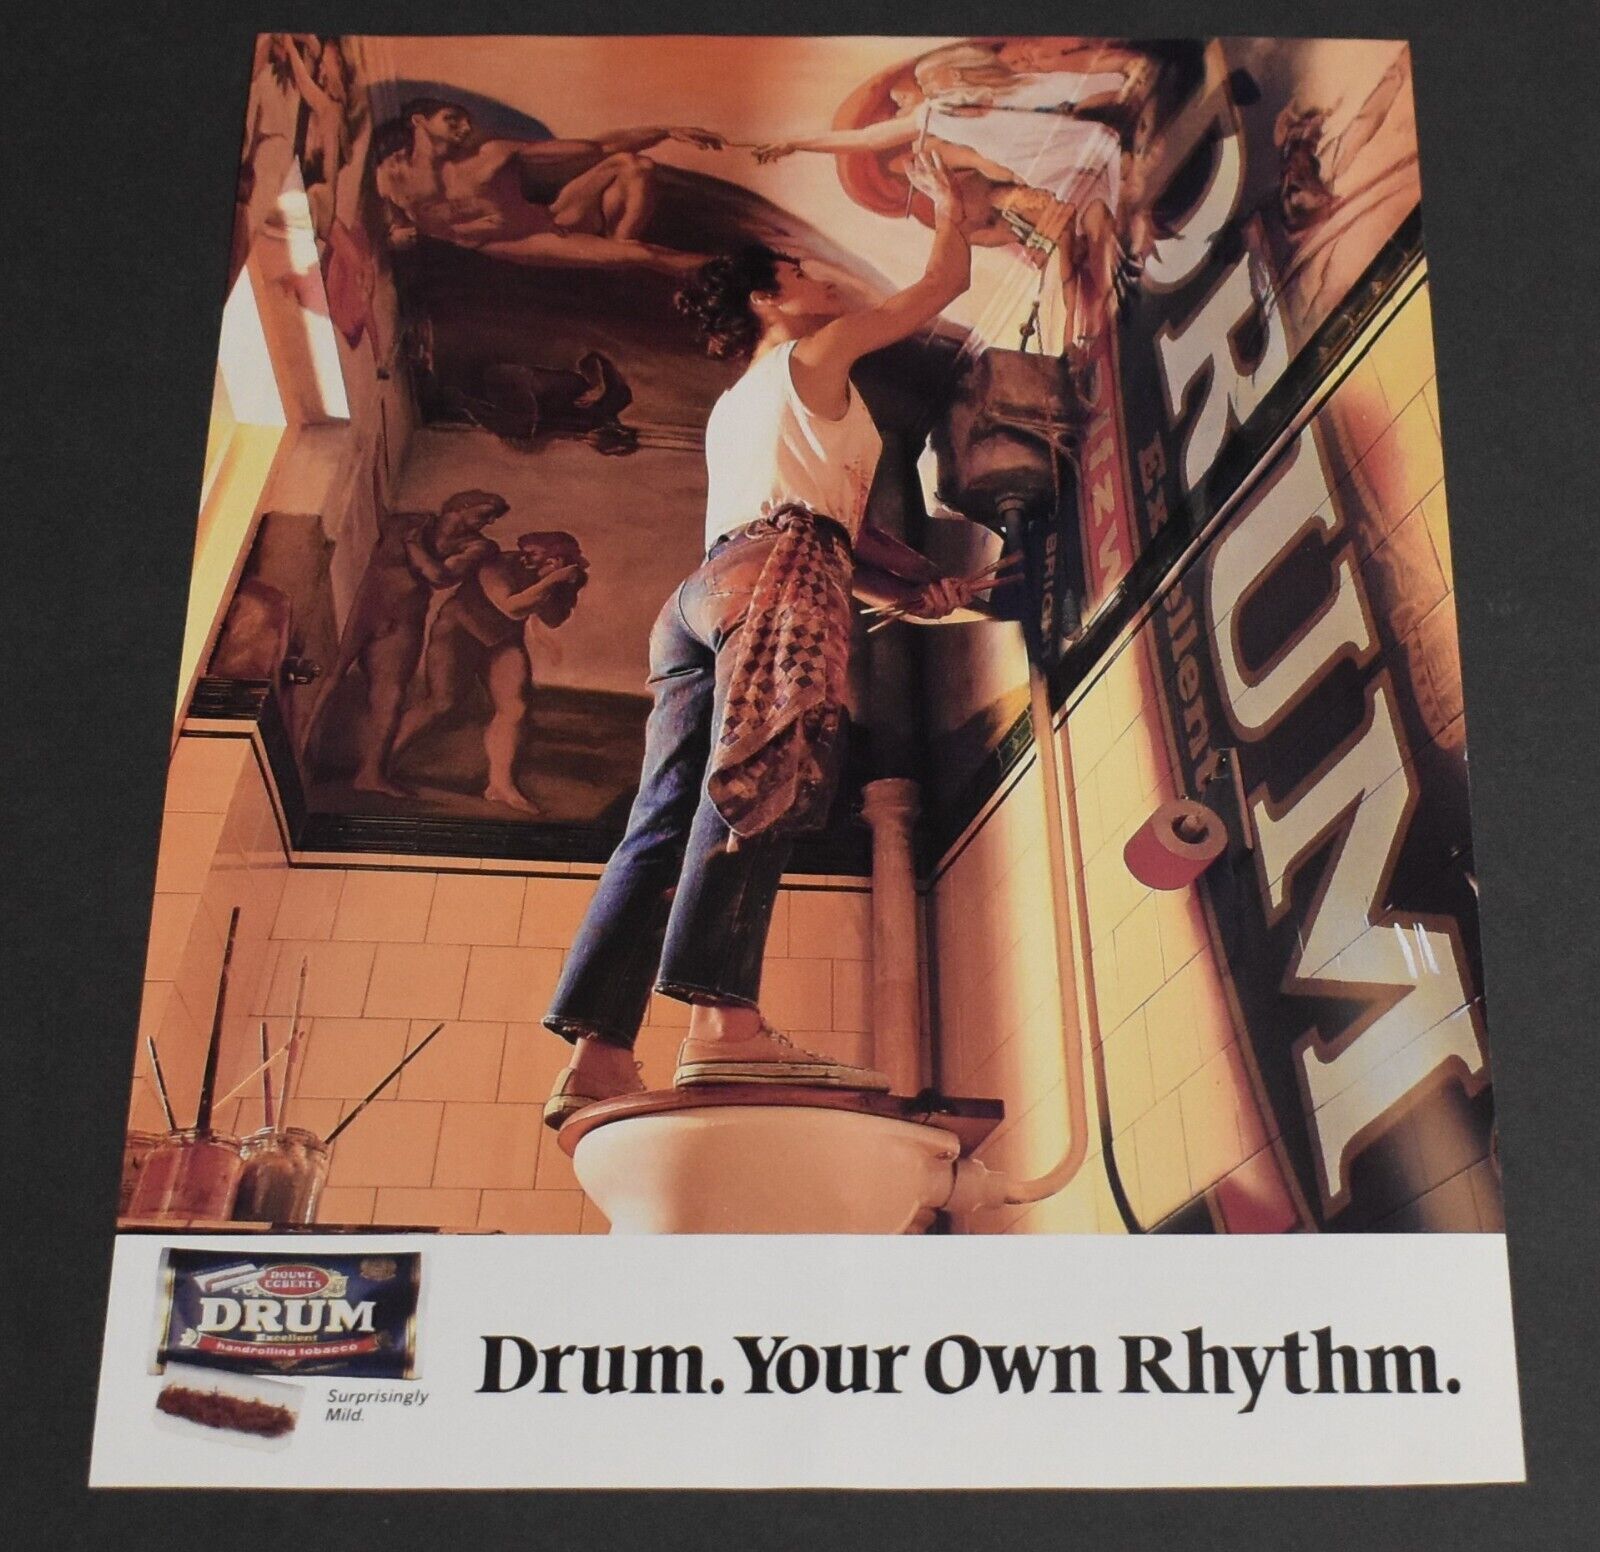 1993 Print Ad Sexy Drum Tobacco Bathroom Art Brunette Lady Painting Ceiling Hair